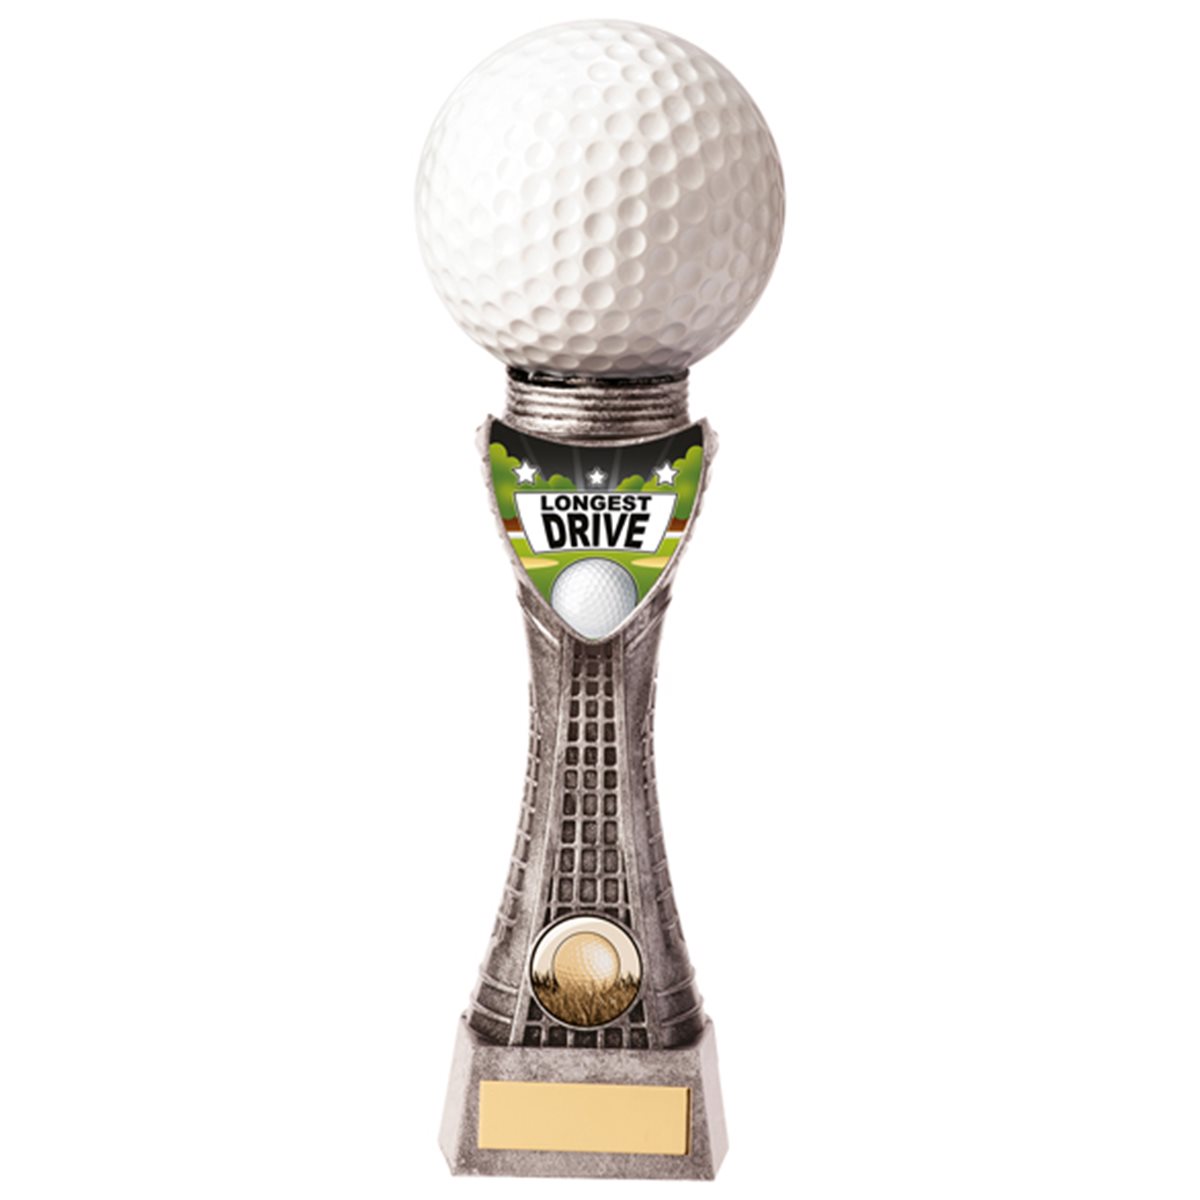 Valiant Golf Ball Longest Drive Trophy PM20651